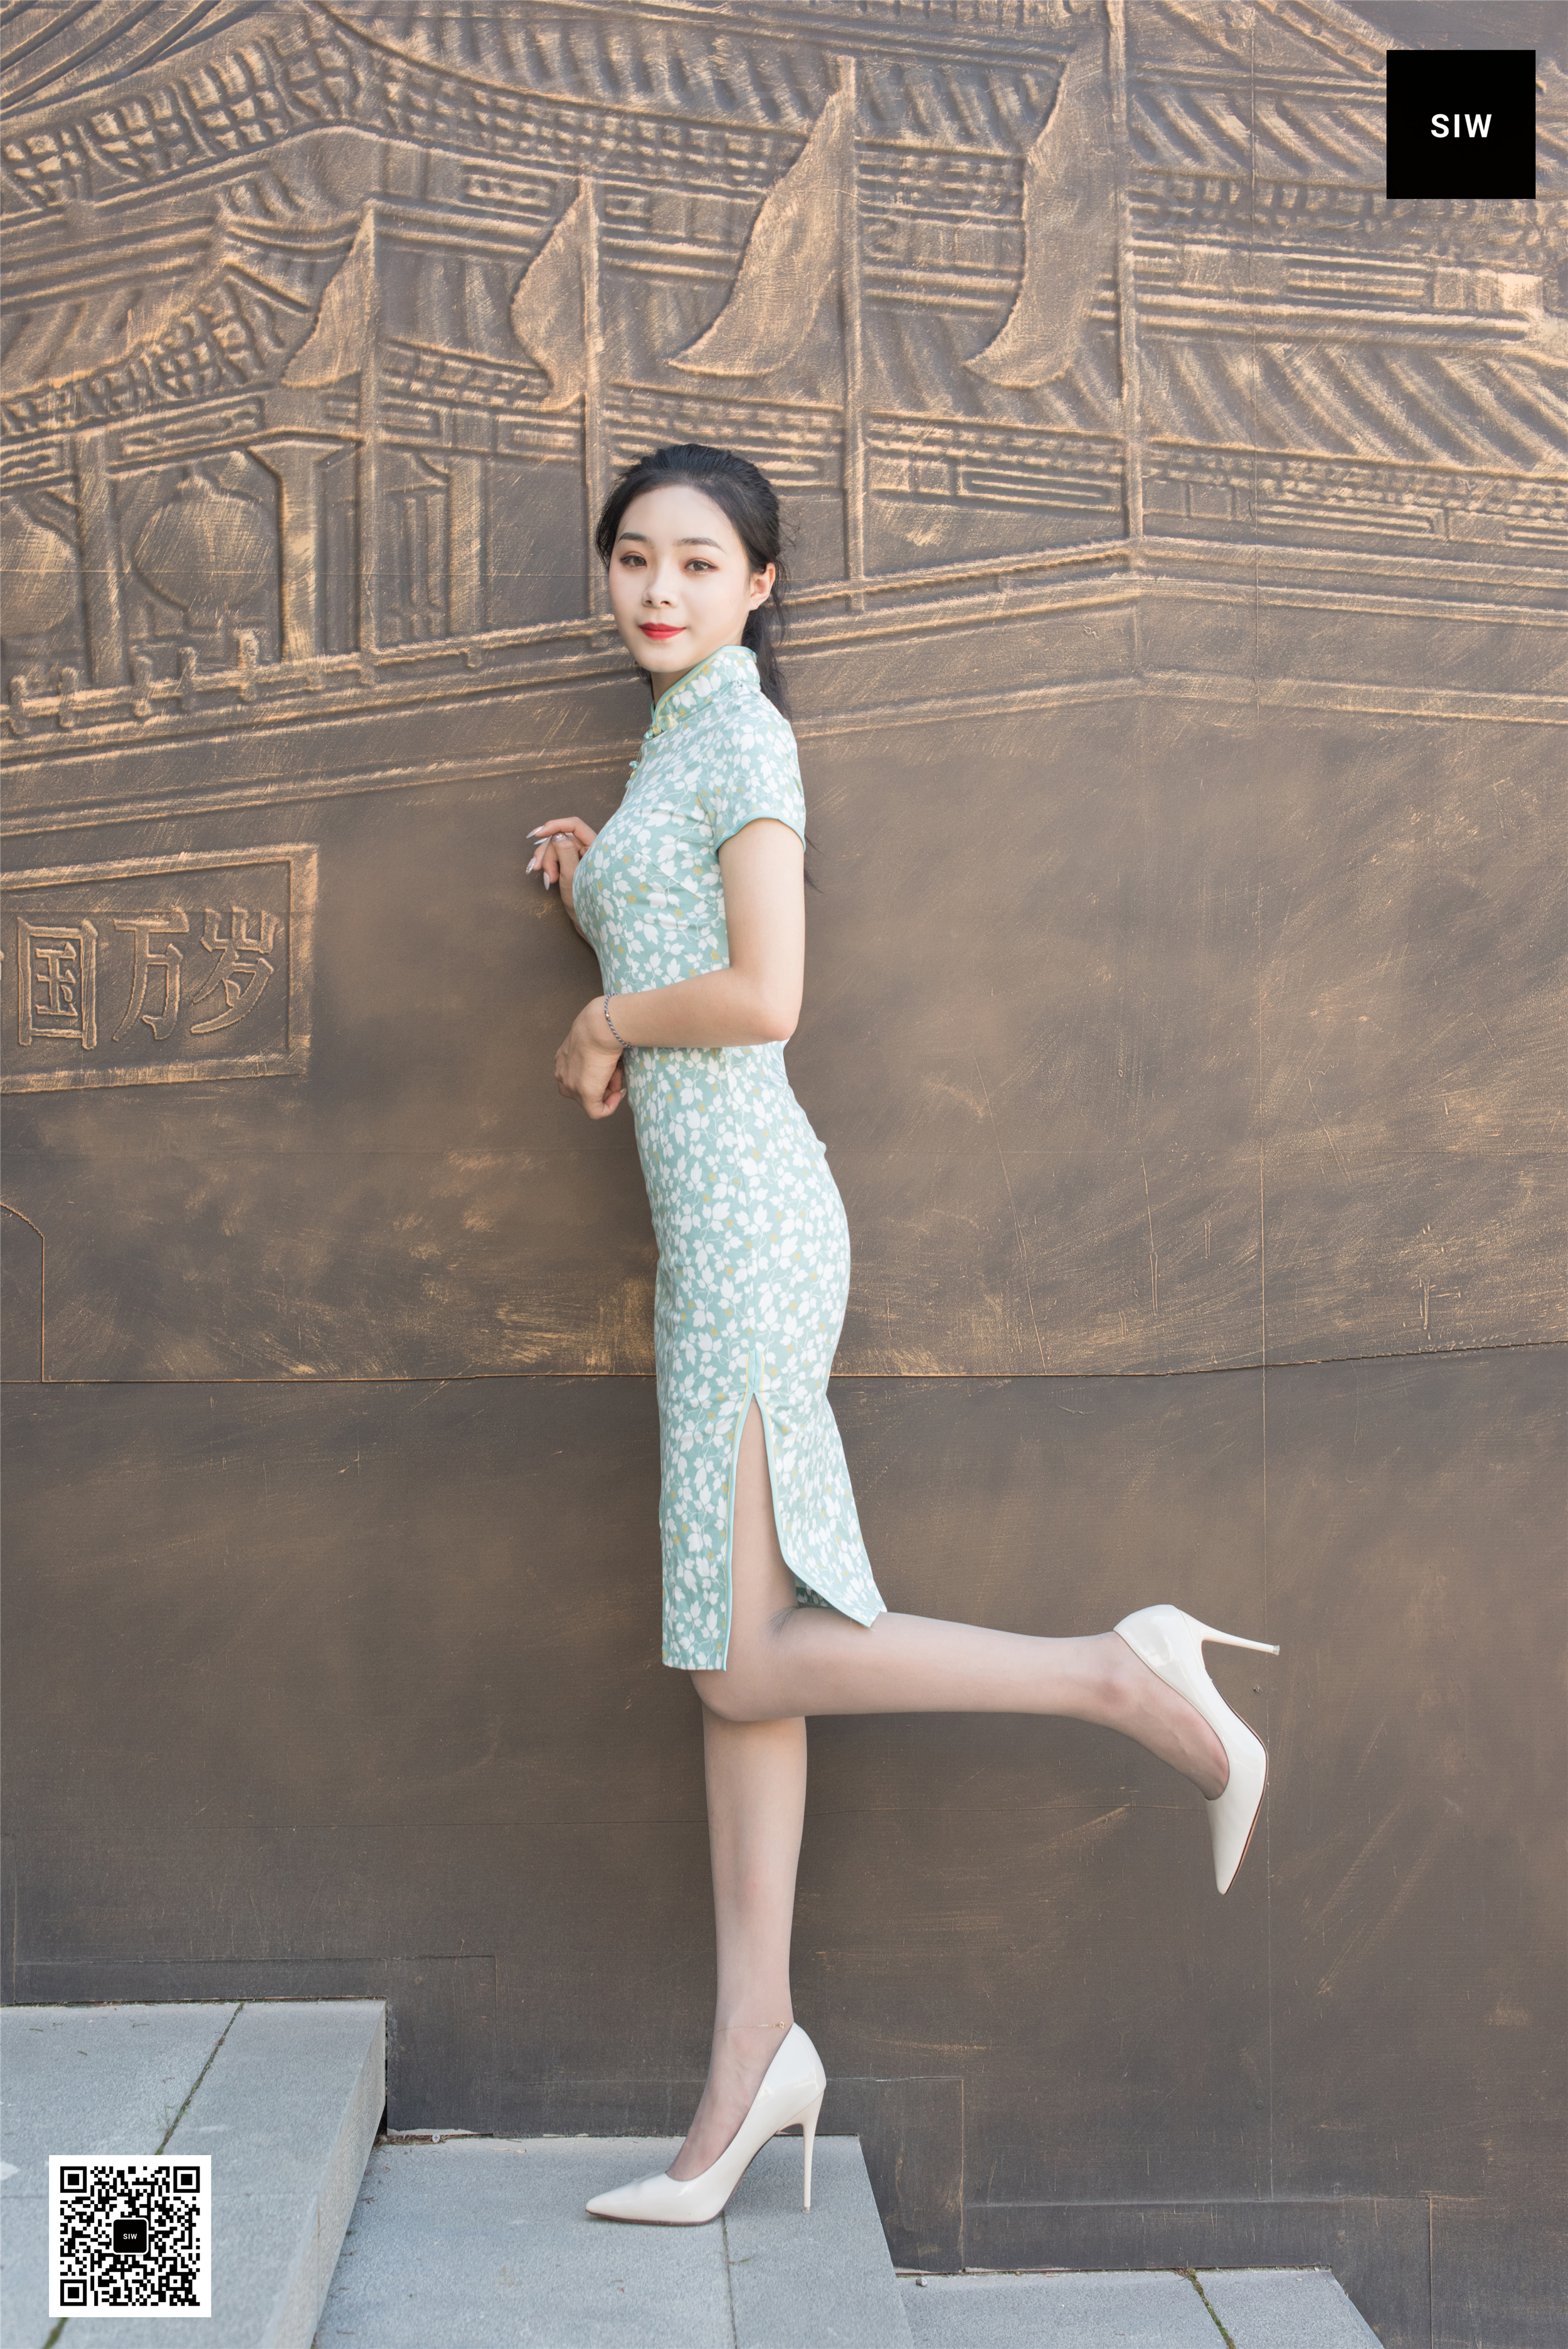 China Beauty Legs and feet 5